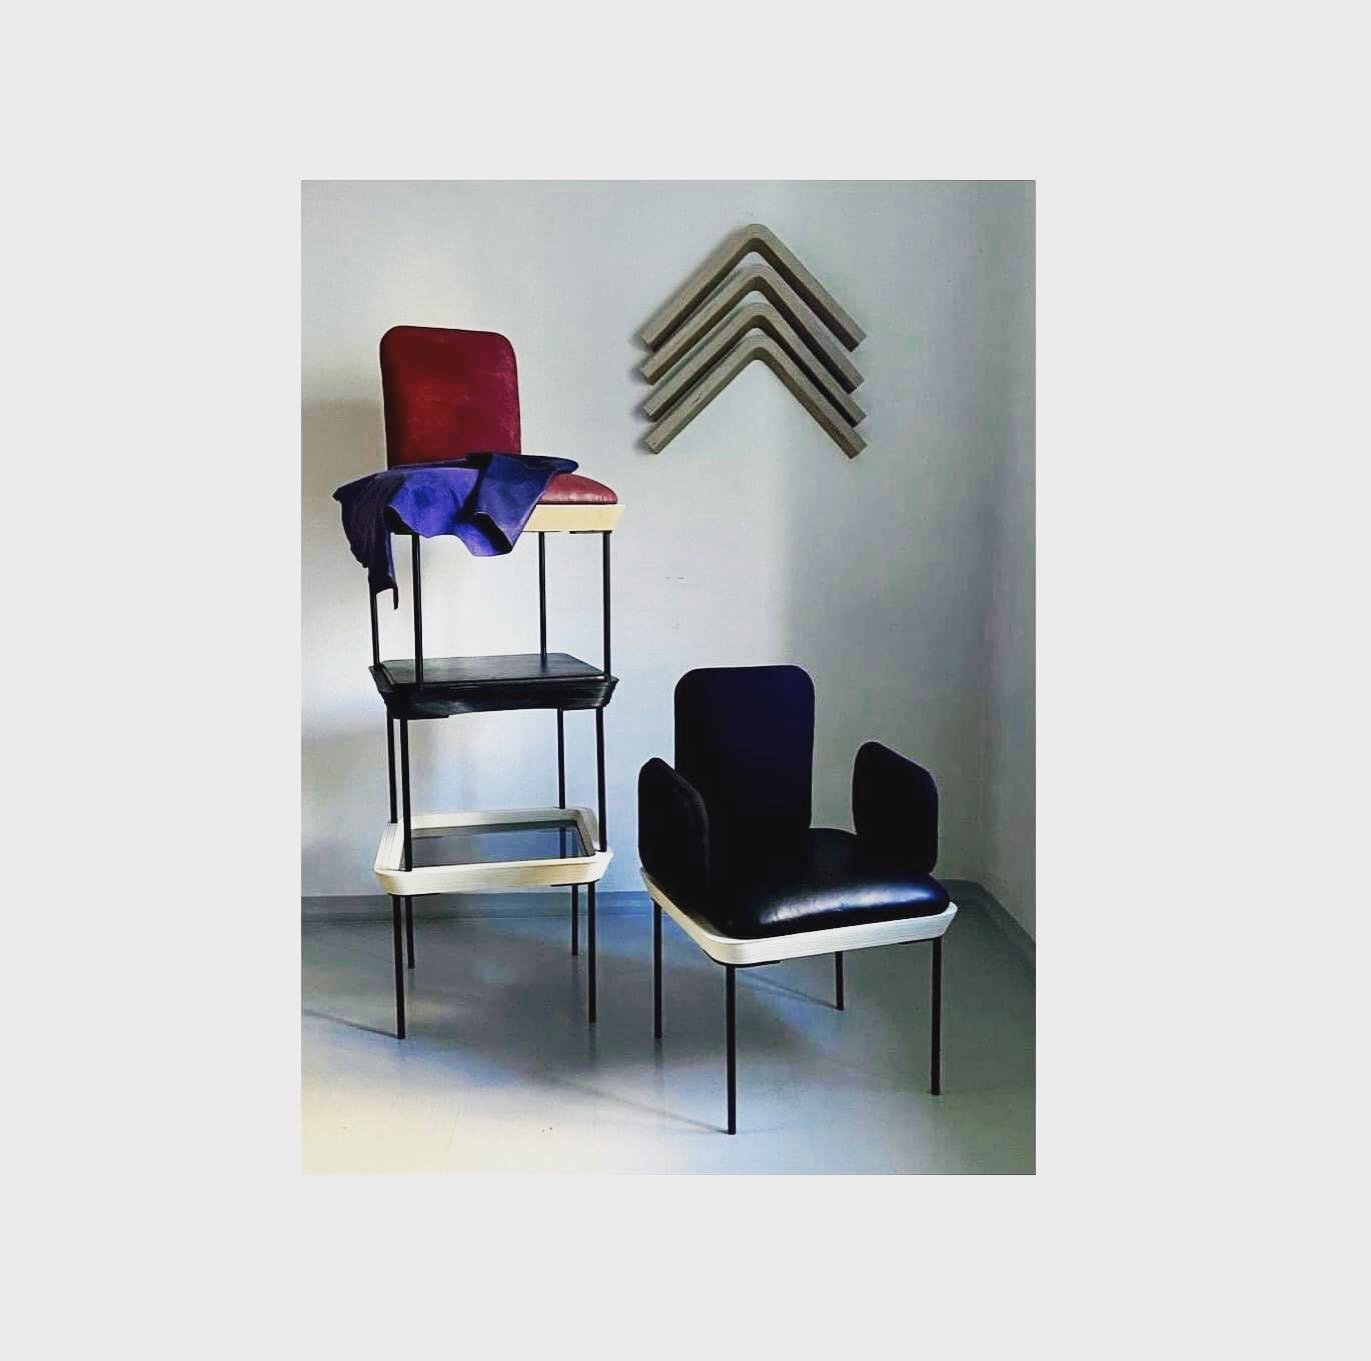 Furniture frame 3D printed ar Tuni by Tero Haapakoski from UPM 100% biomaterial. Circular Economy. 
.
.
.
Produced by the designer.
.
.
.
#upm
#upmbiofore
#jesse.pietila
#finnishdesign
#taiketukee